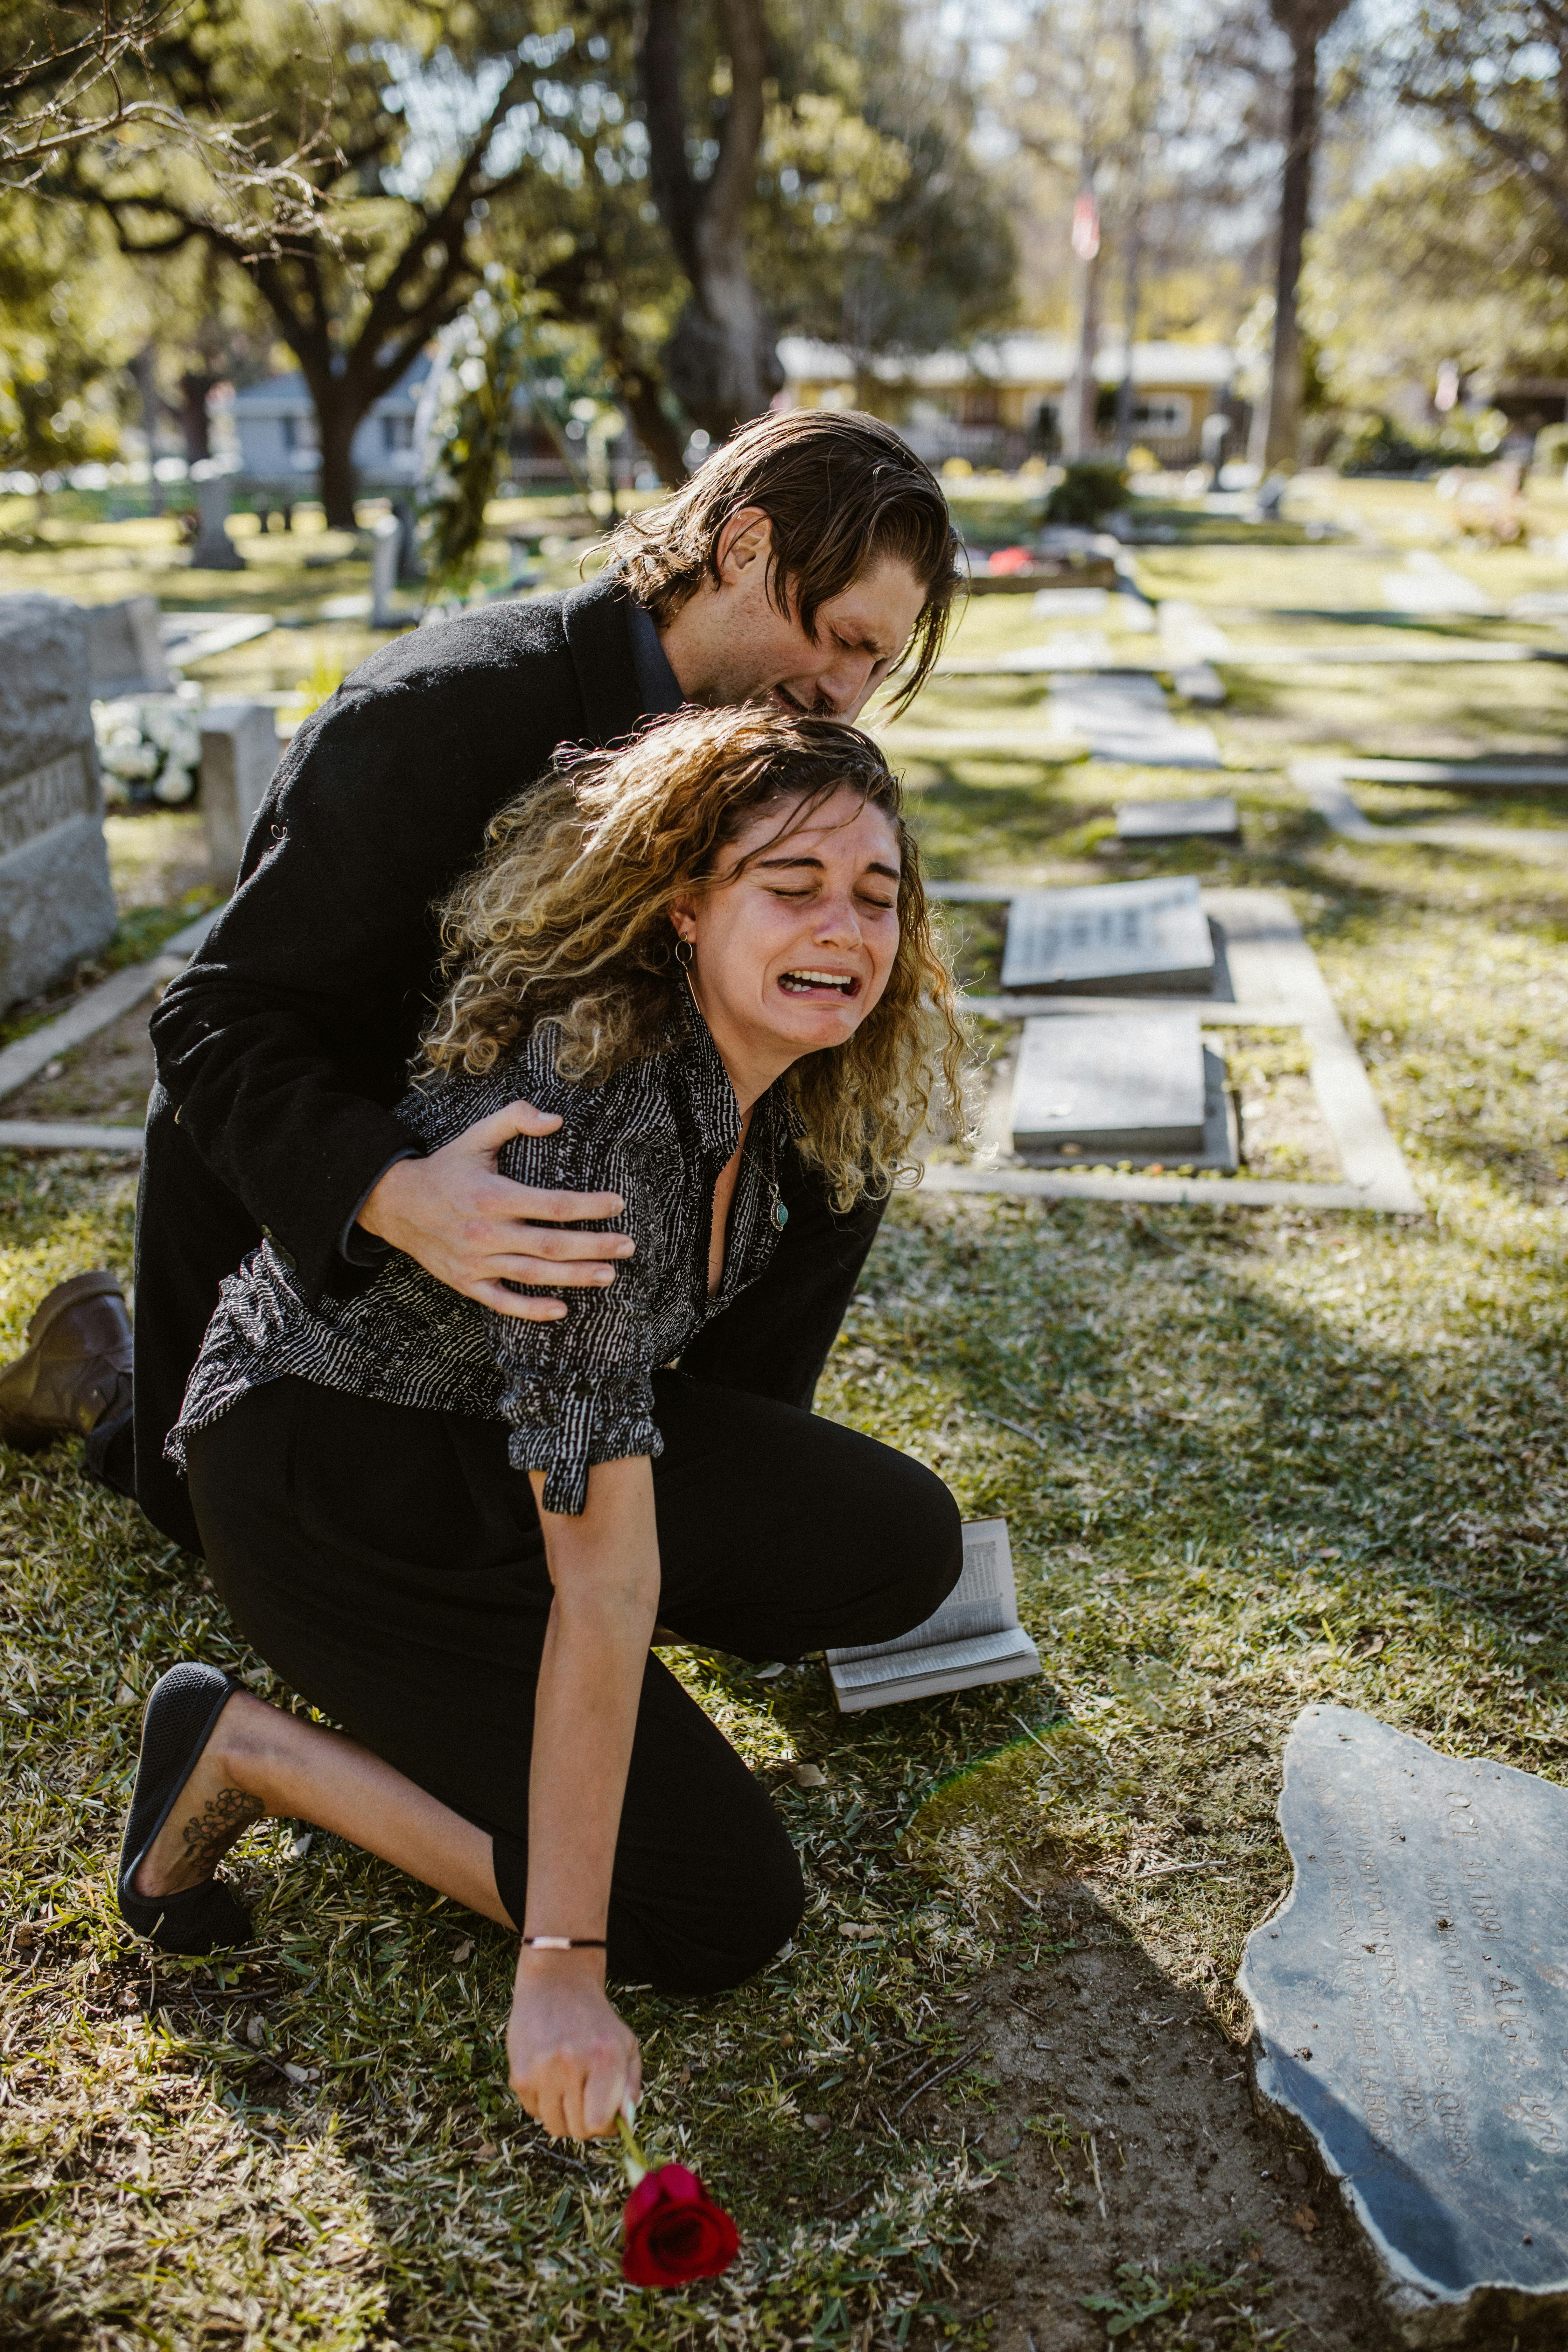 Una joven consolada por un hombre mientras llora en una tumba | Foto: Pexels